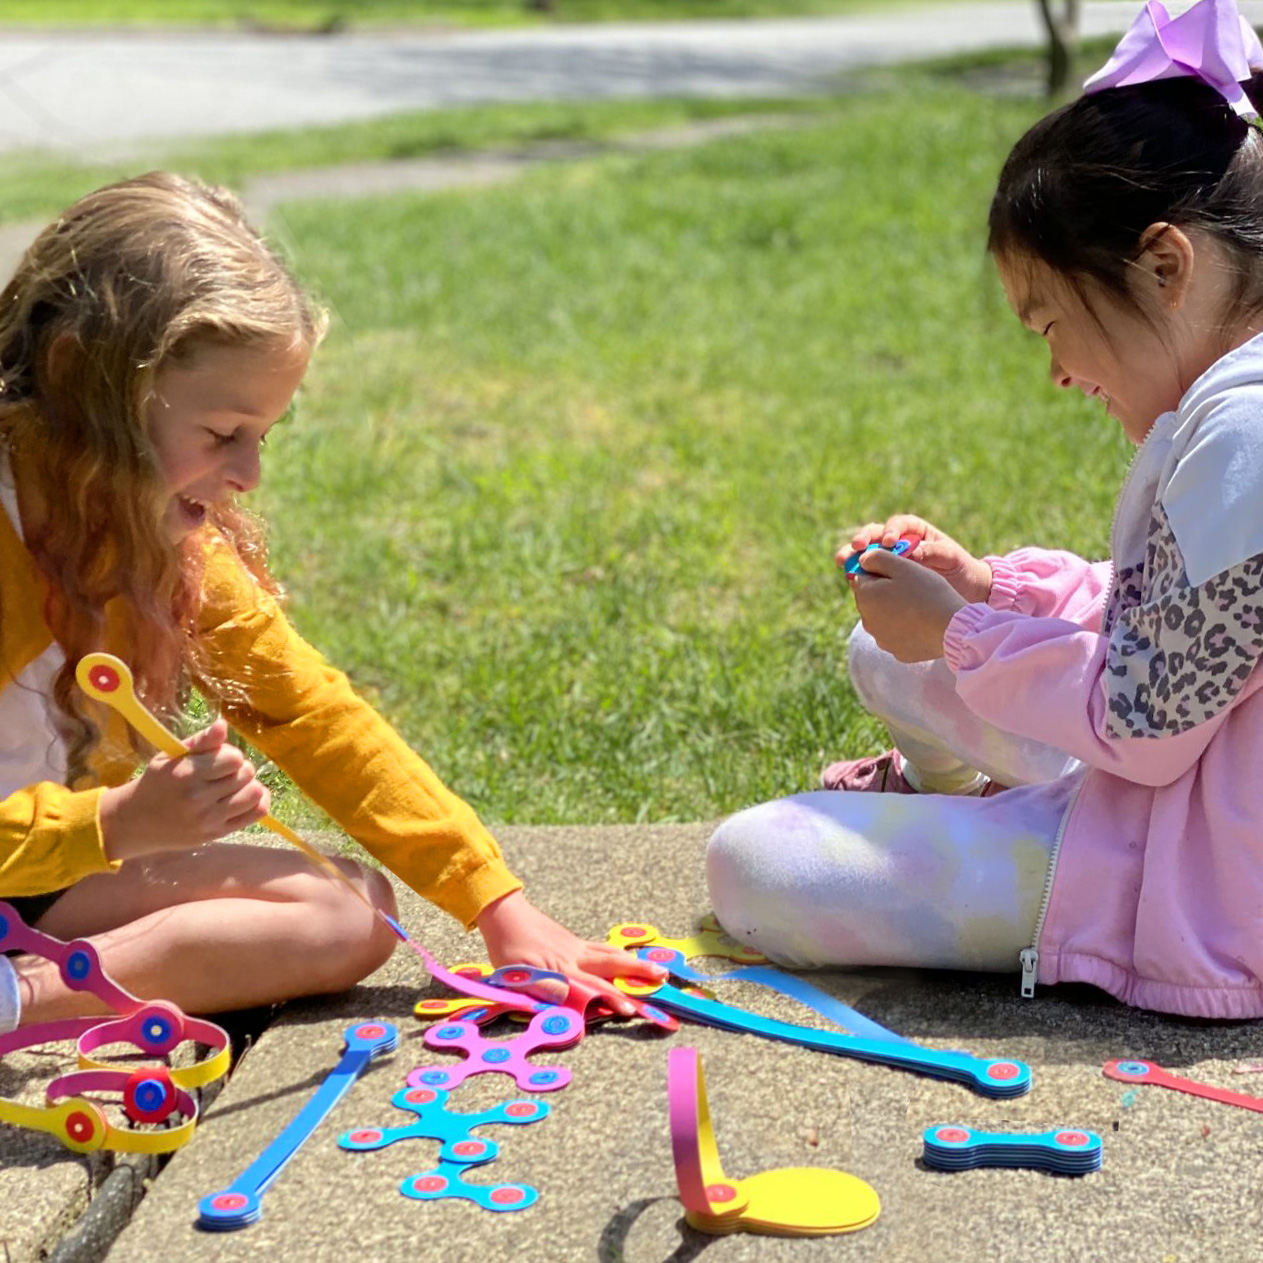 Play Snake - Tinkergarten outdoor activities where kids learn through play